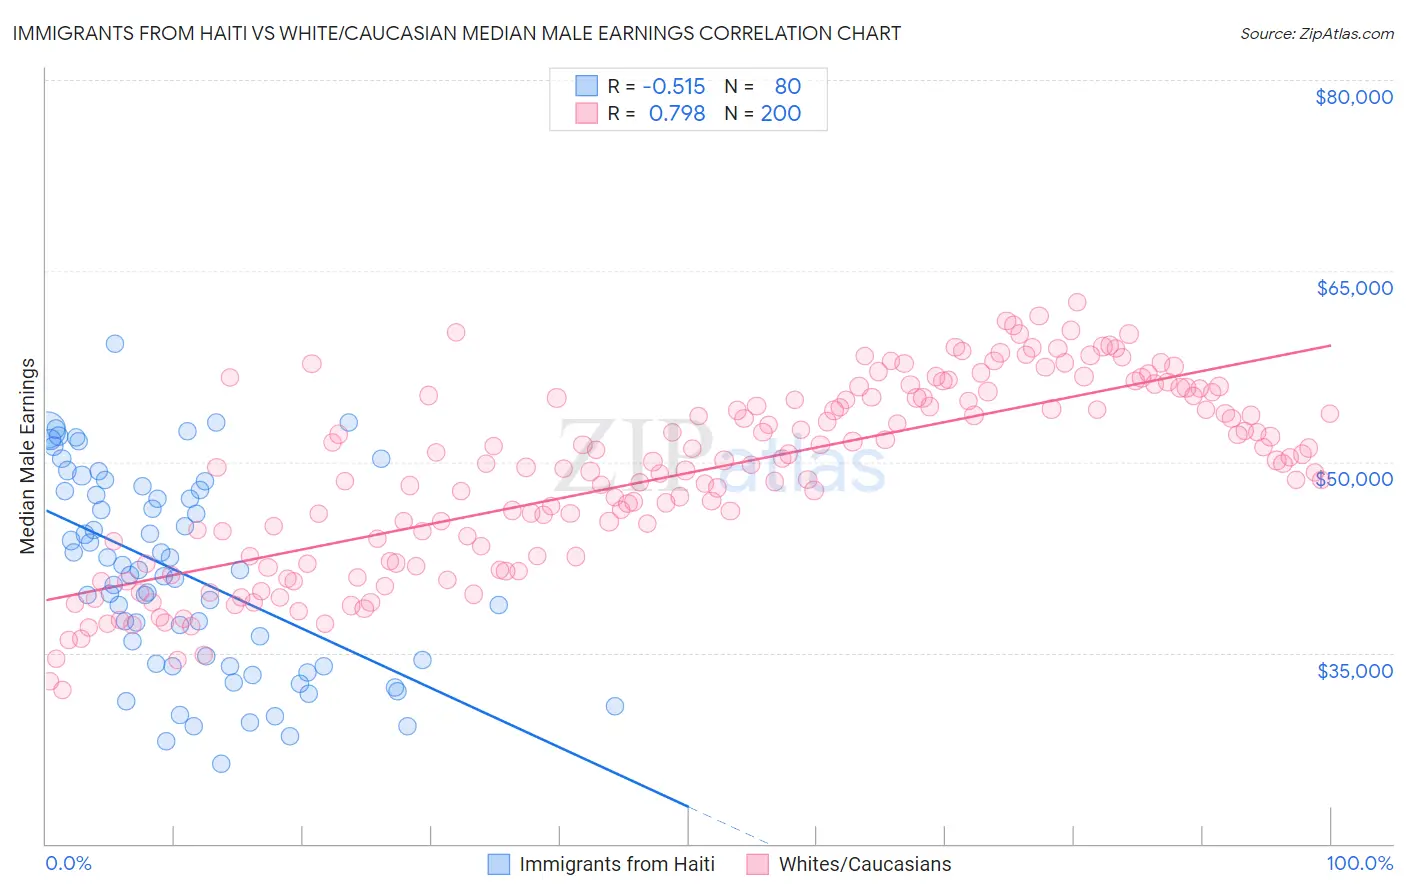 Immigrants from Haiti vs White/Caucasian Median Male Earnings